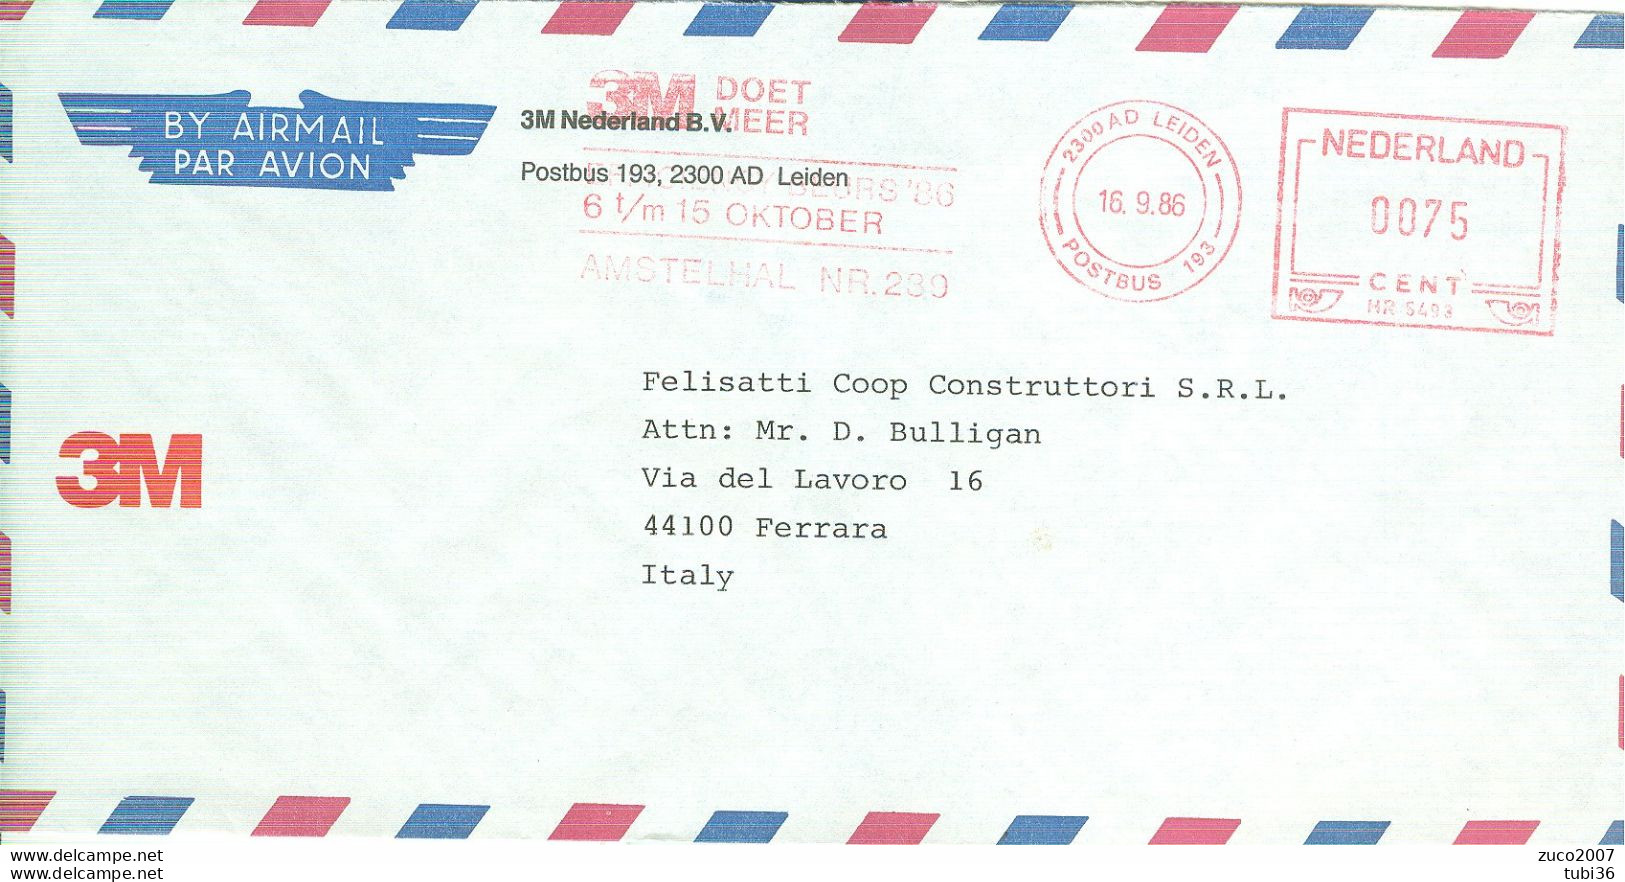 NEDERLAND - LEIDEN - 3M -1986 - FERRARA - ITALIA - Macchine Per Obliterare (EMA)